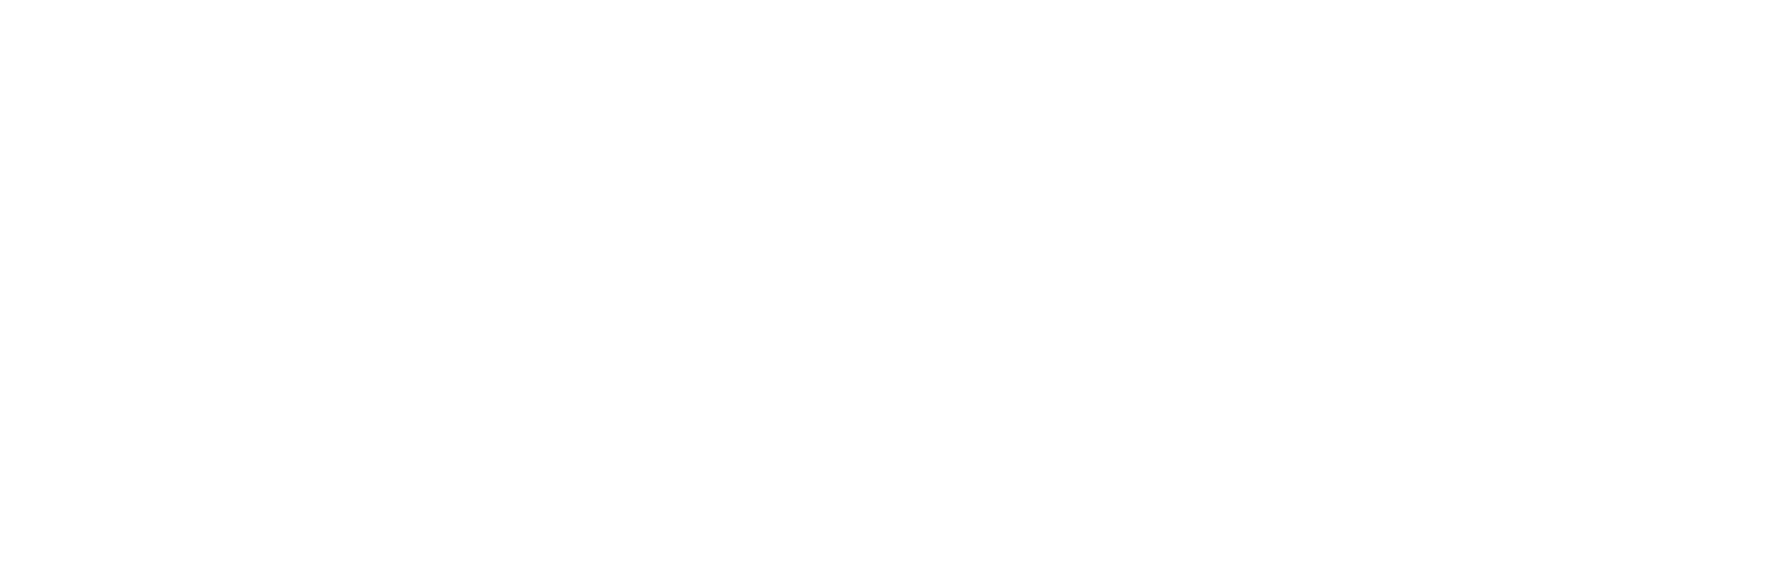 TITLE BINGO BONANZA